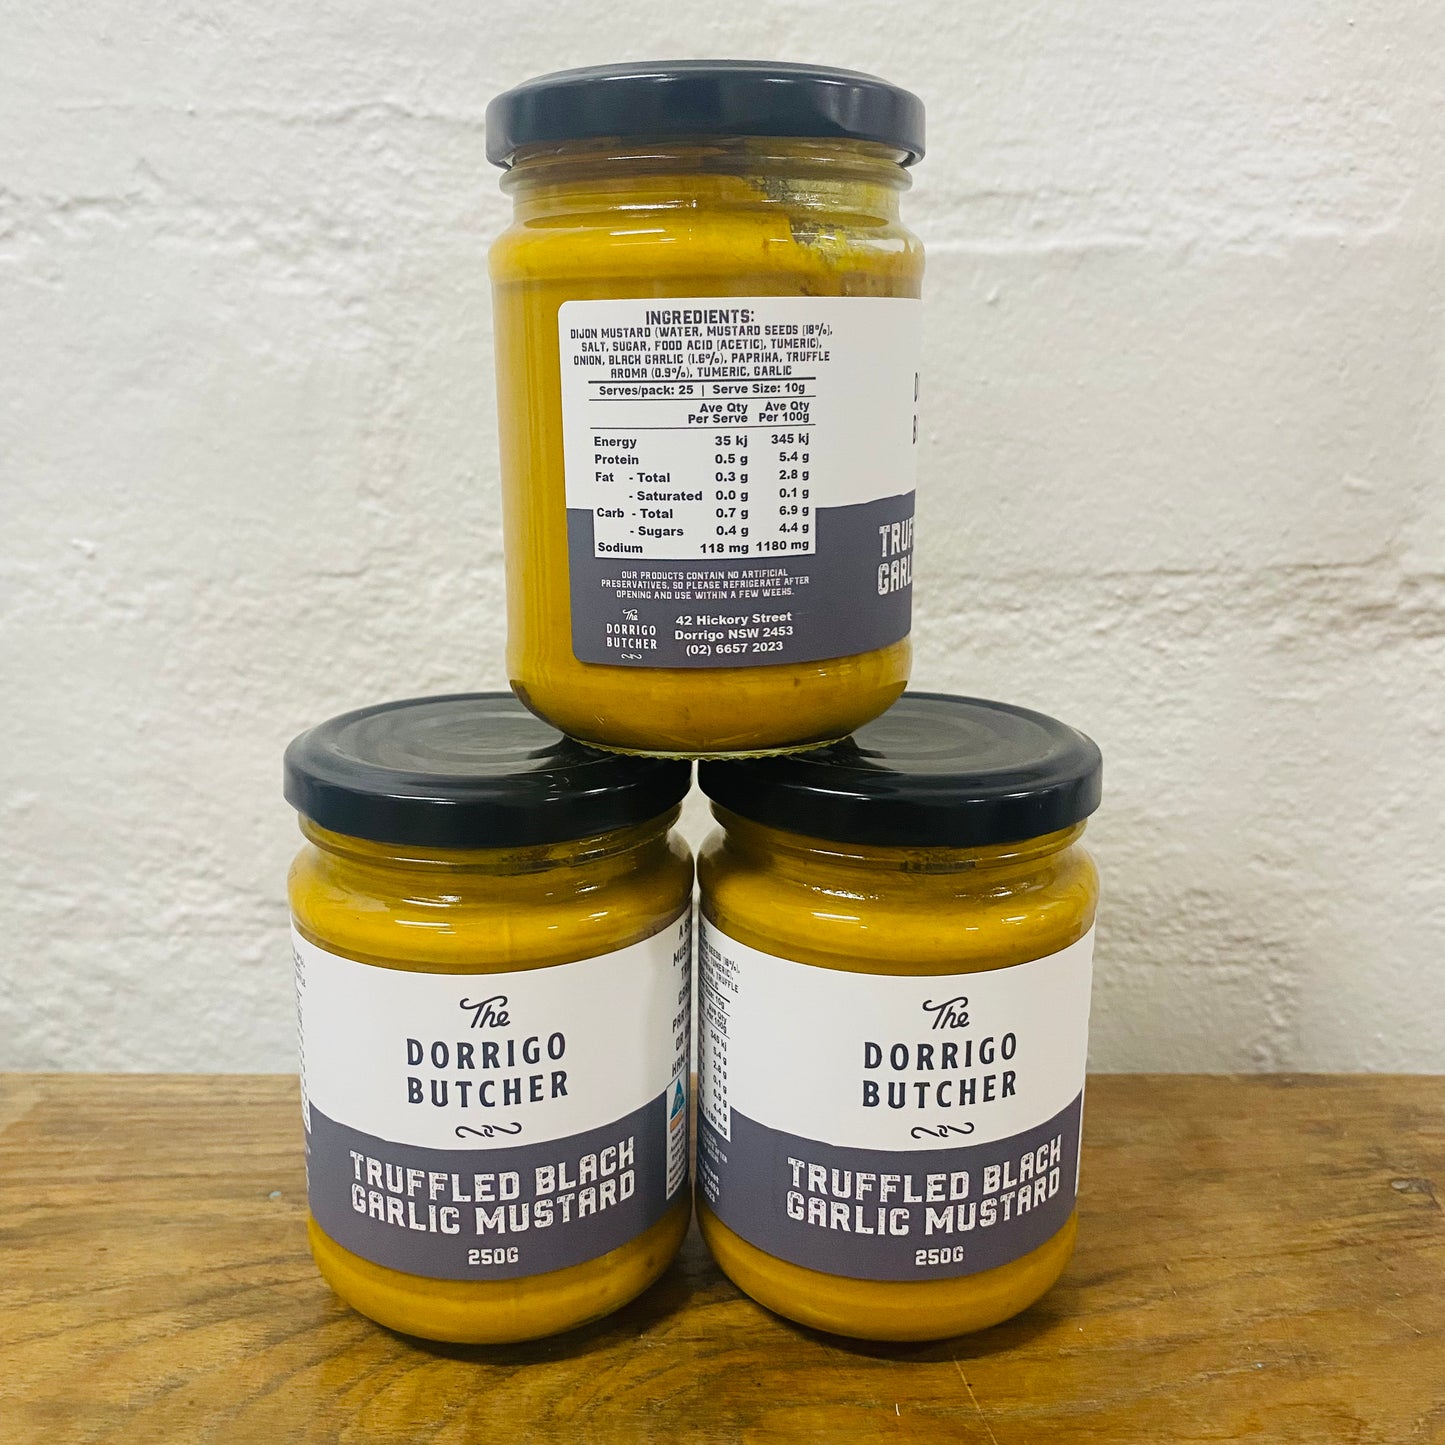 Truffle Black Garlic Mustard by Dorrigo Butcher